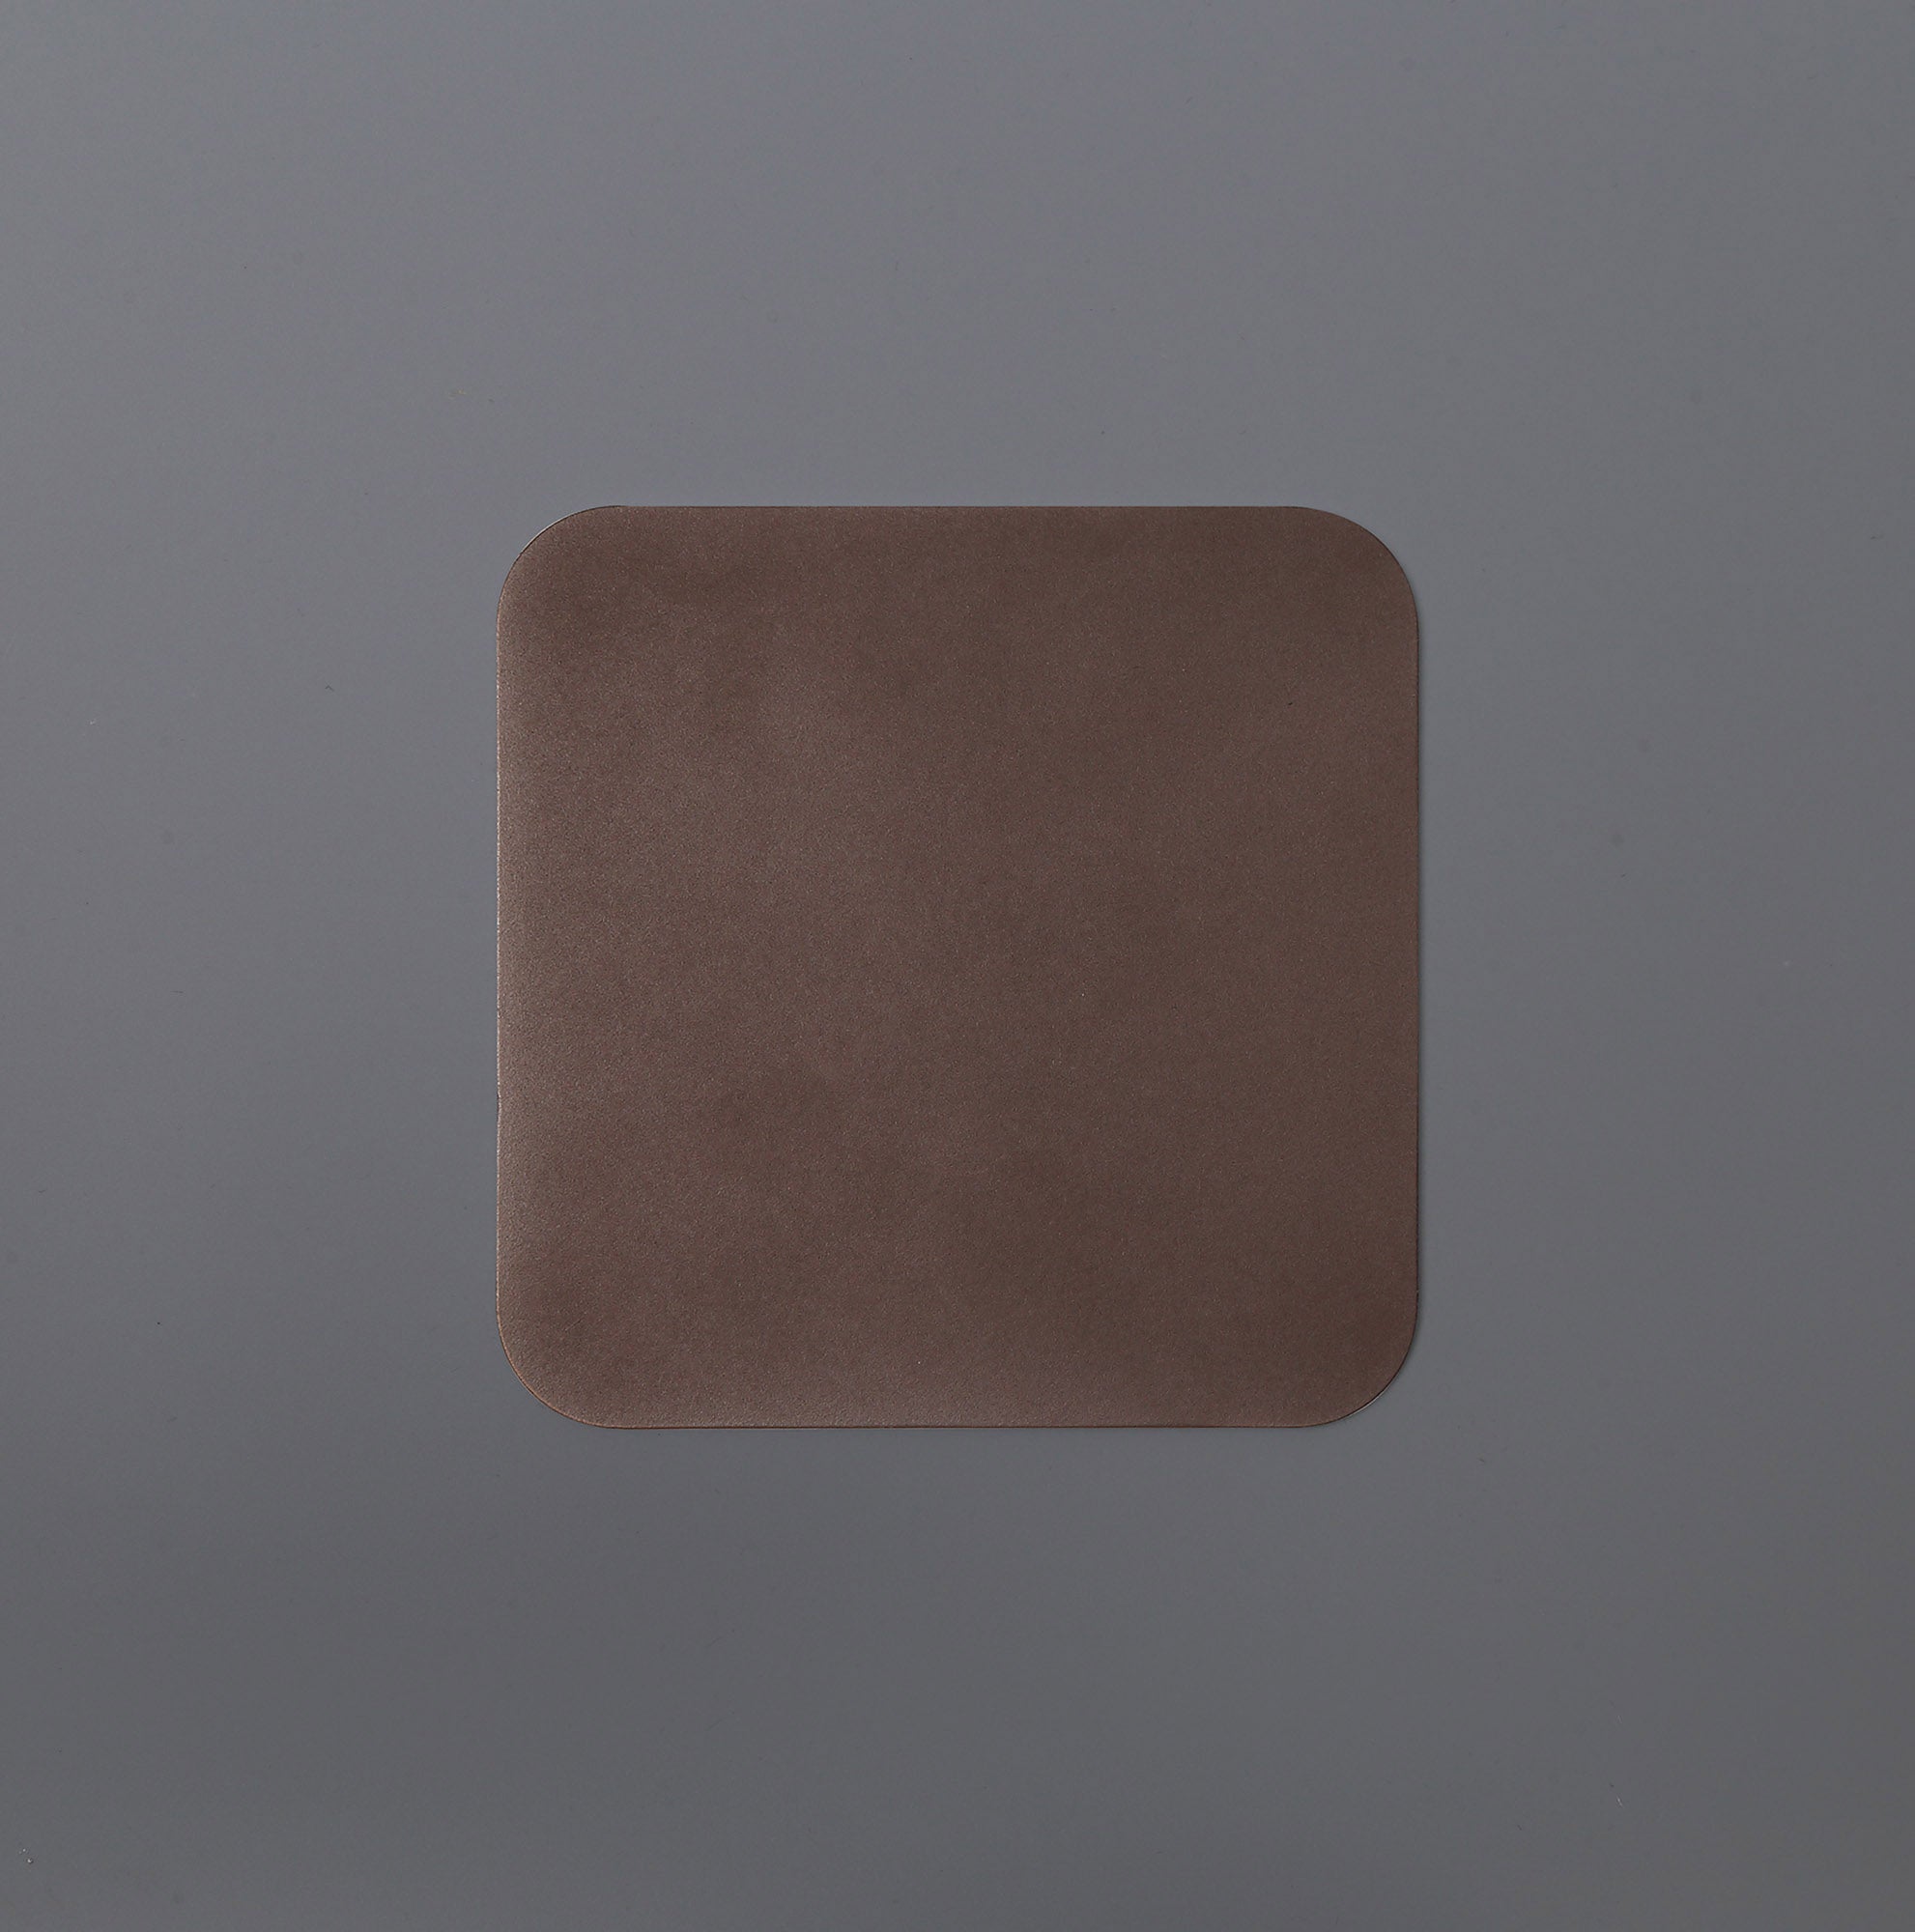 Modus 150mm Non-Electric Square Plate, Coffee